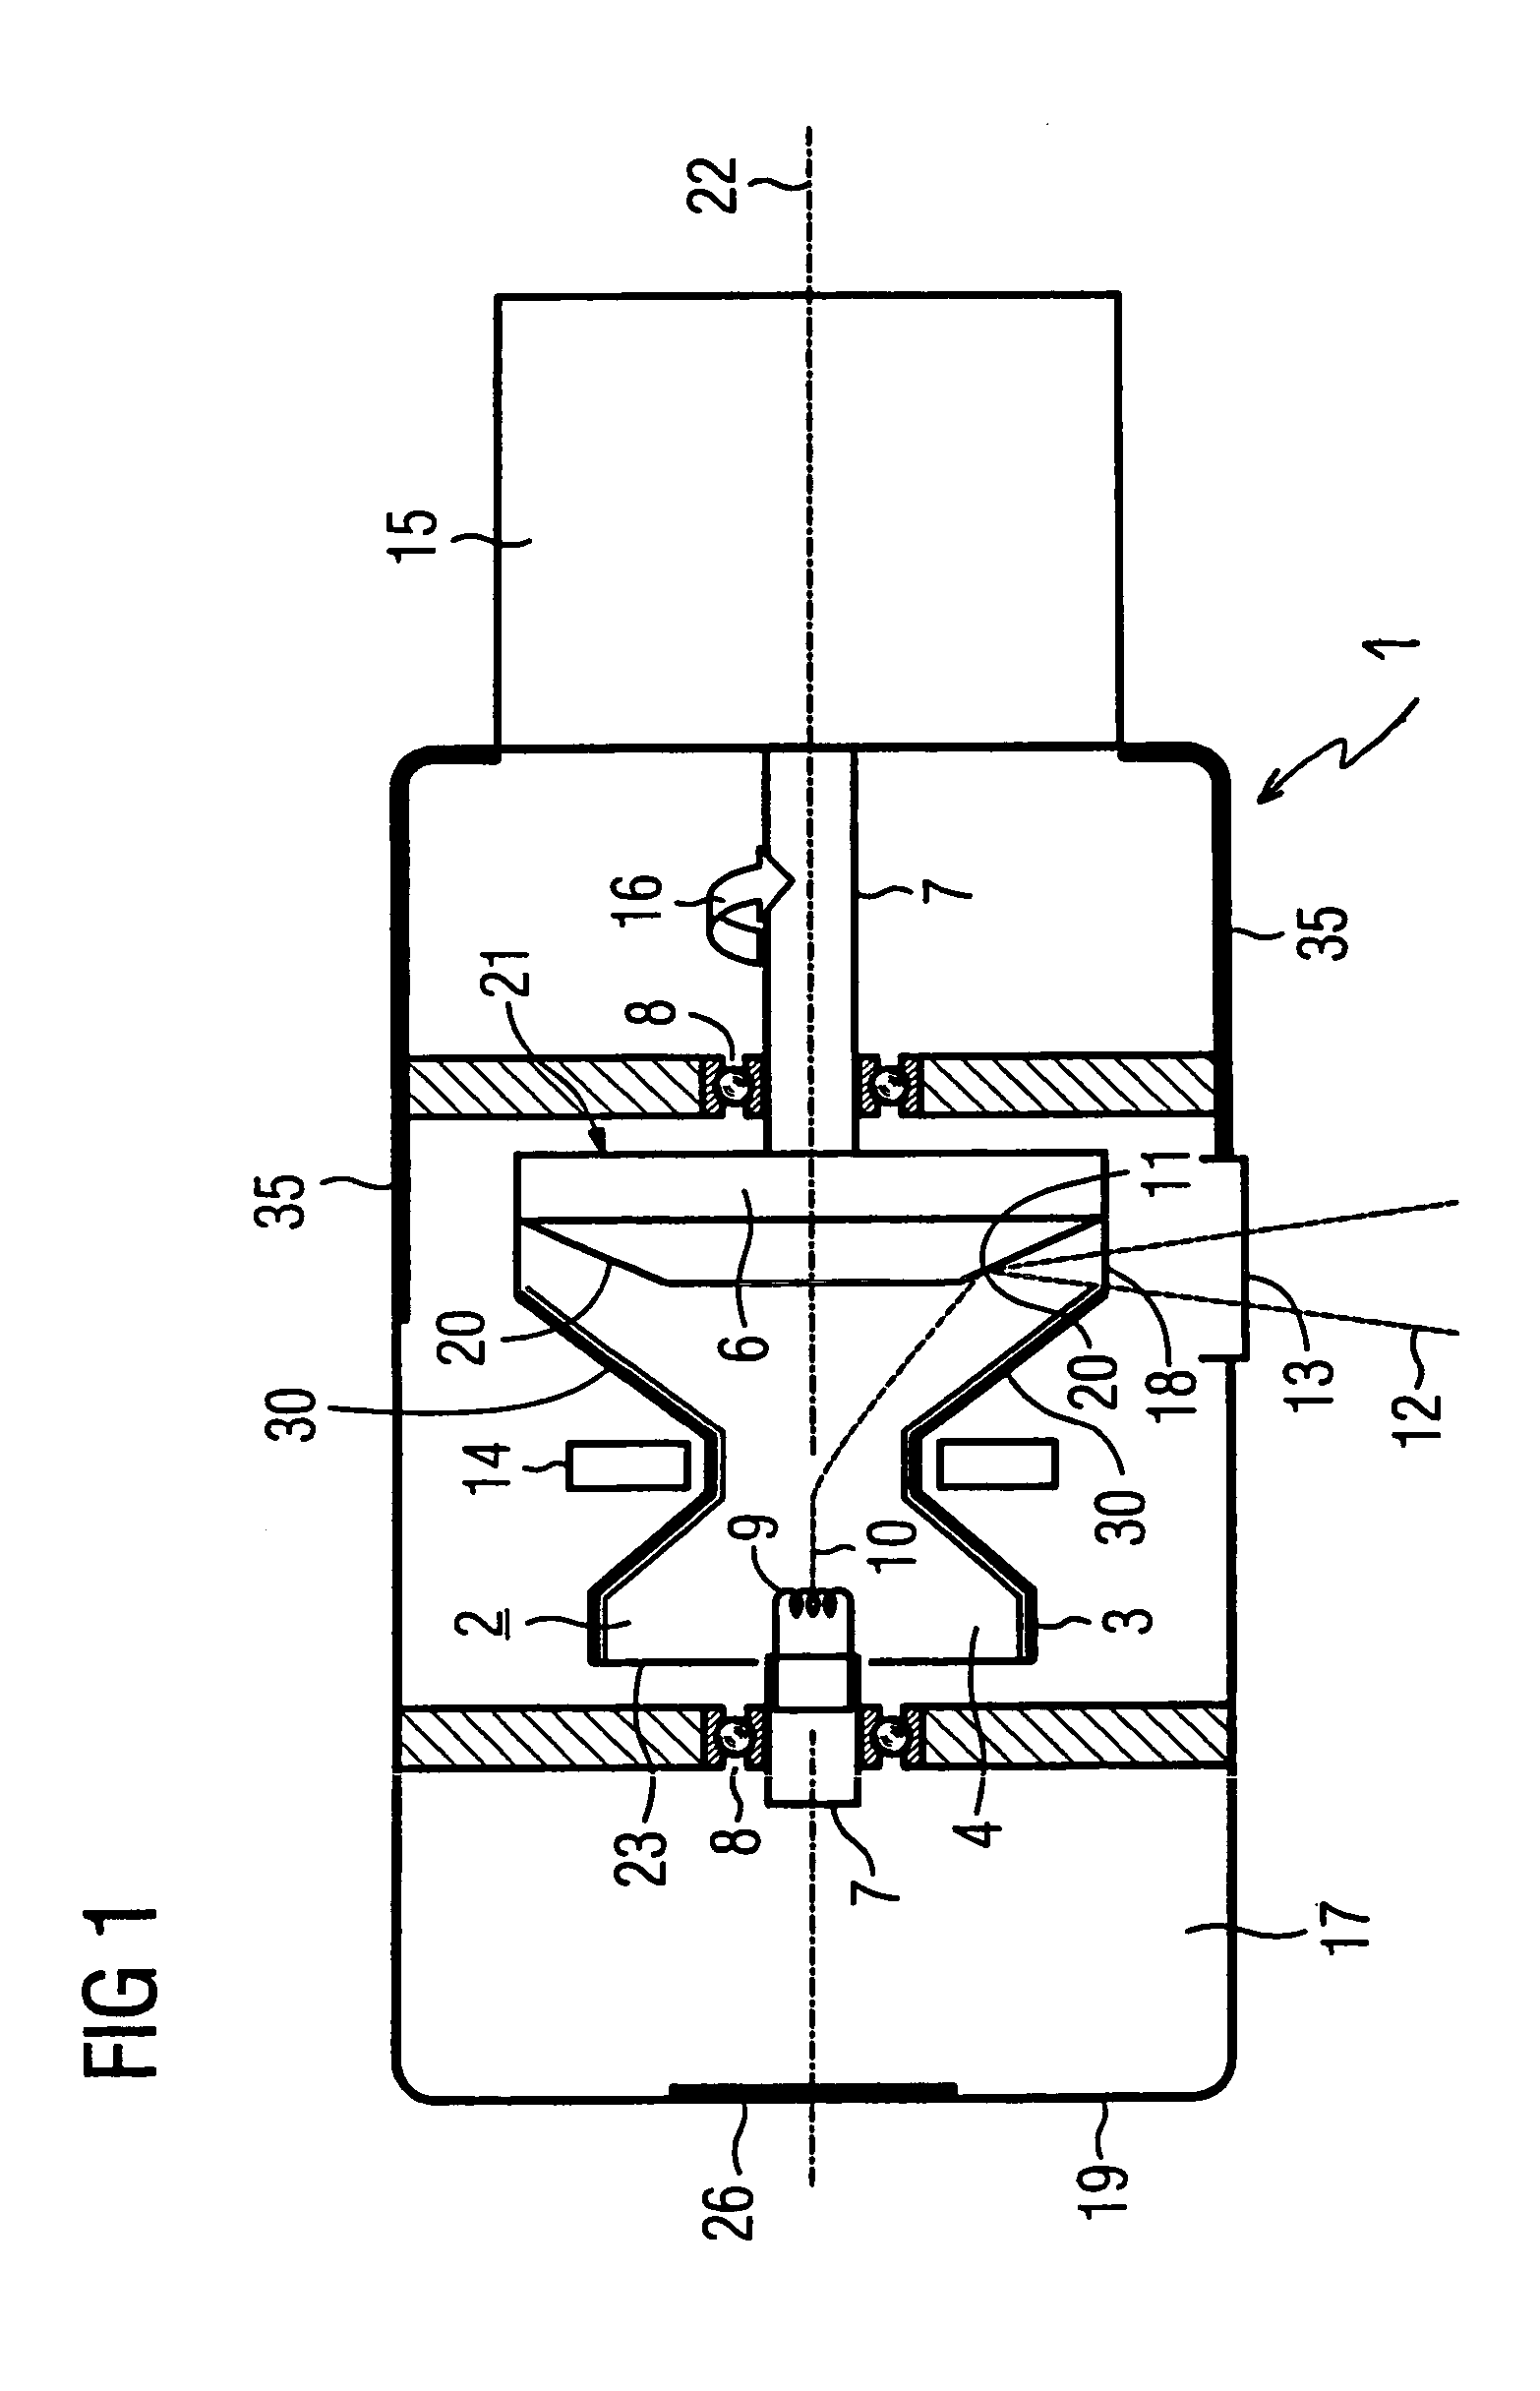 Leakage radiation shielding arrangement for a rotary piston x-ray radiator